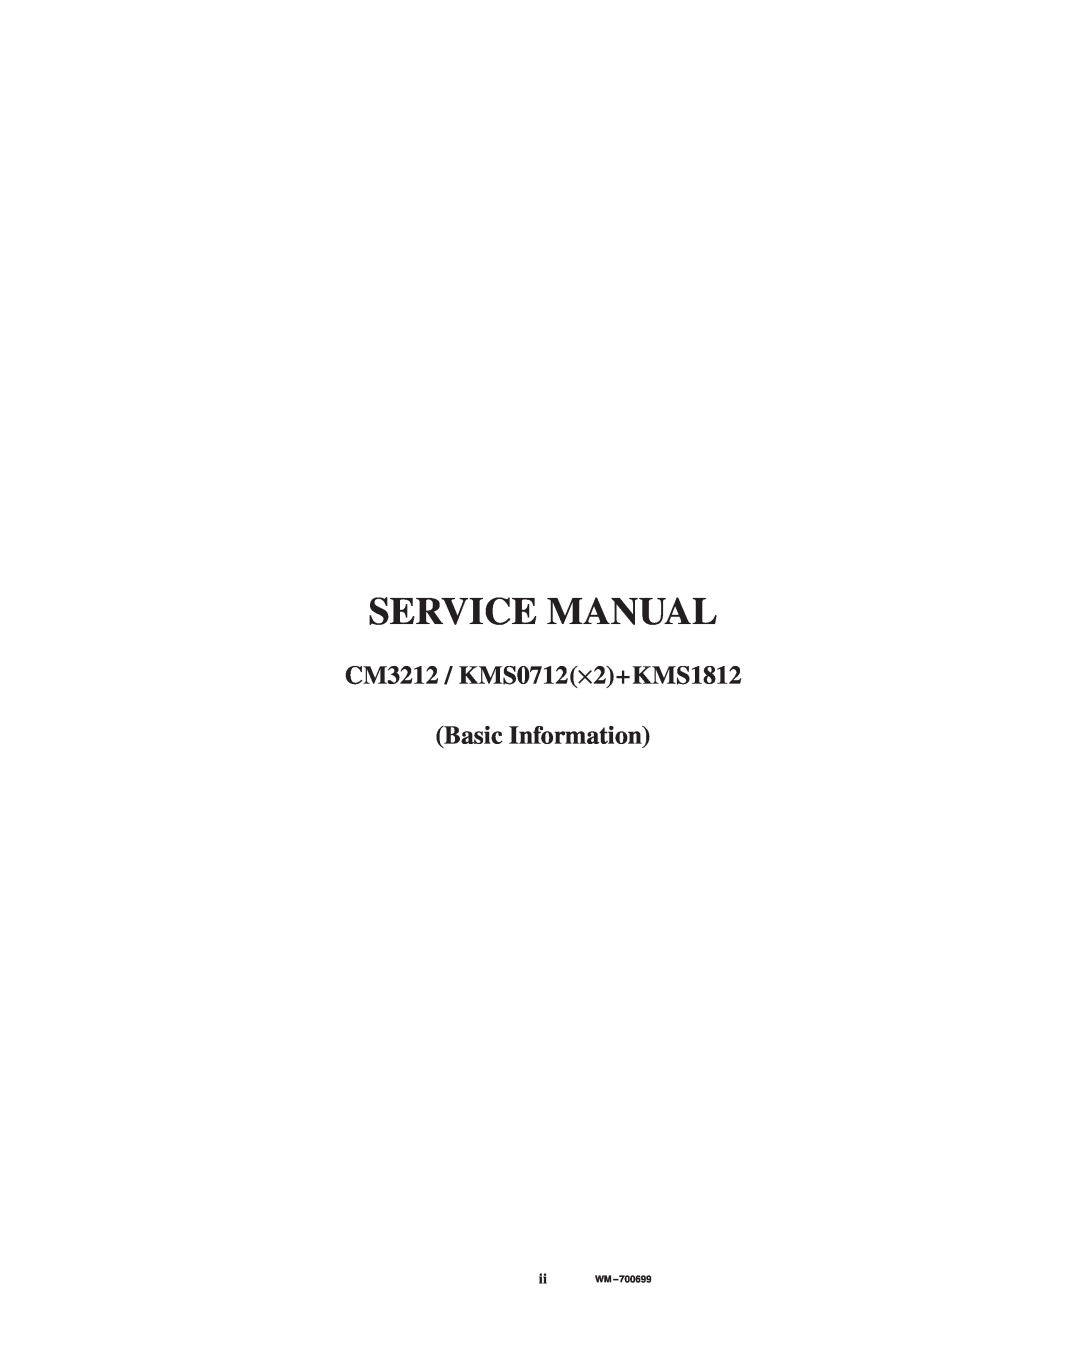 Sanyo service manual CM3212 / KMS0712⋅2+KMS1812 Basic Information, iiWM 